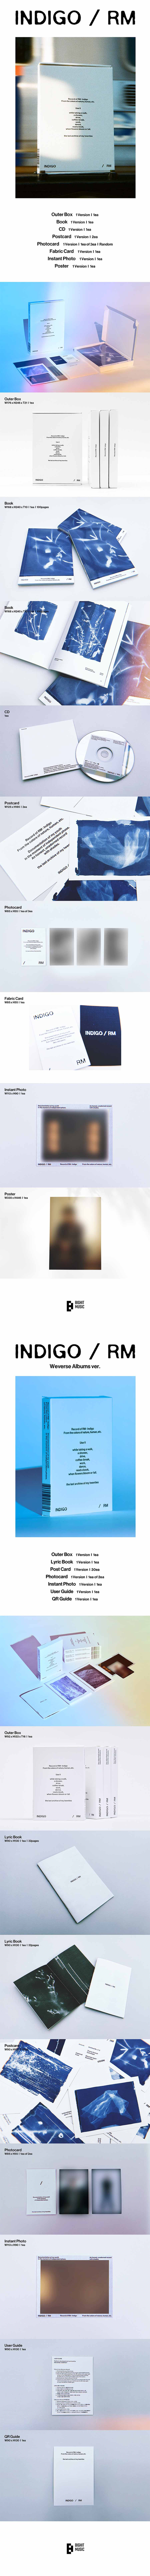 rm-bts-indigo-weverse-set-wholesale